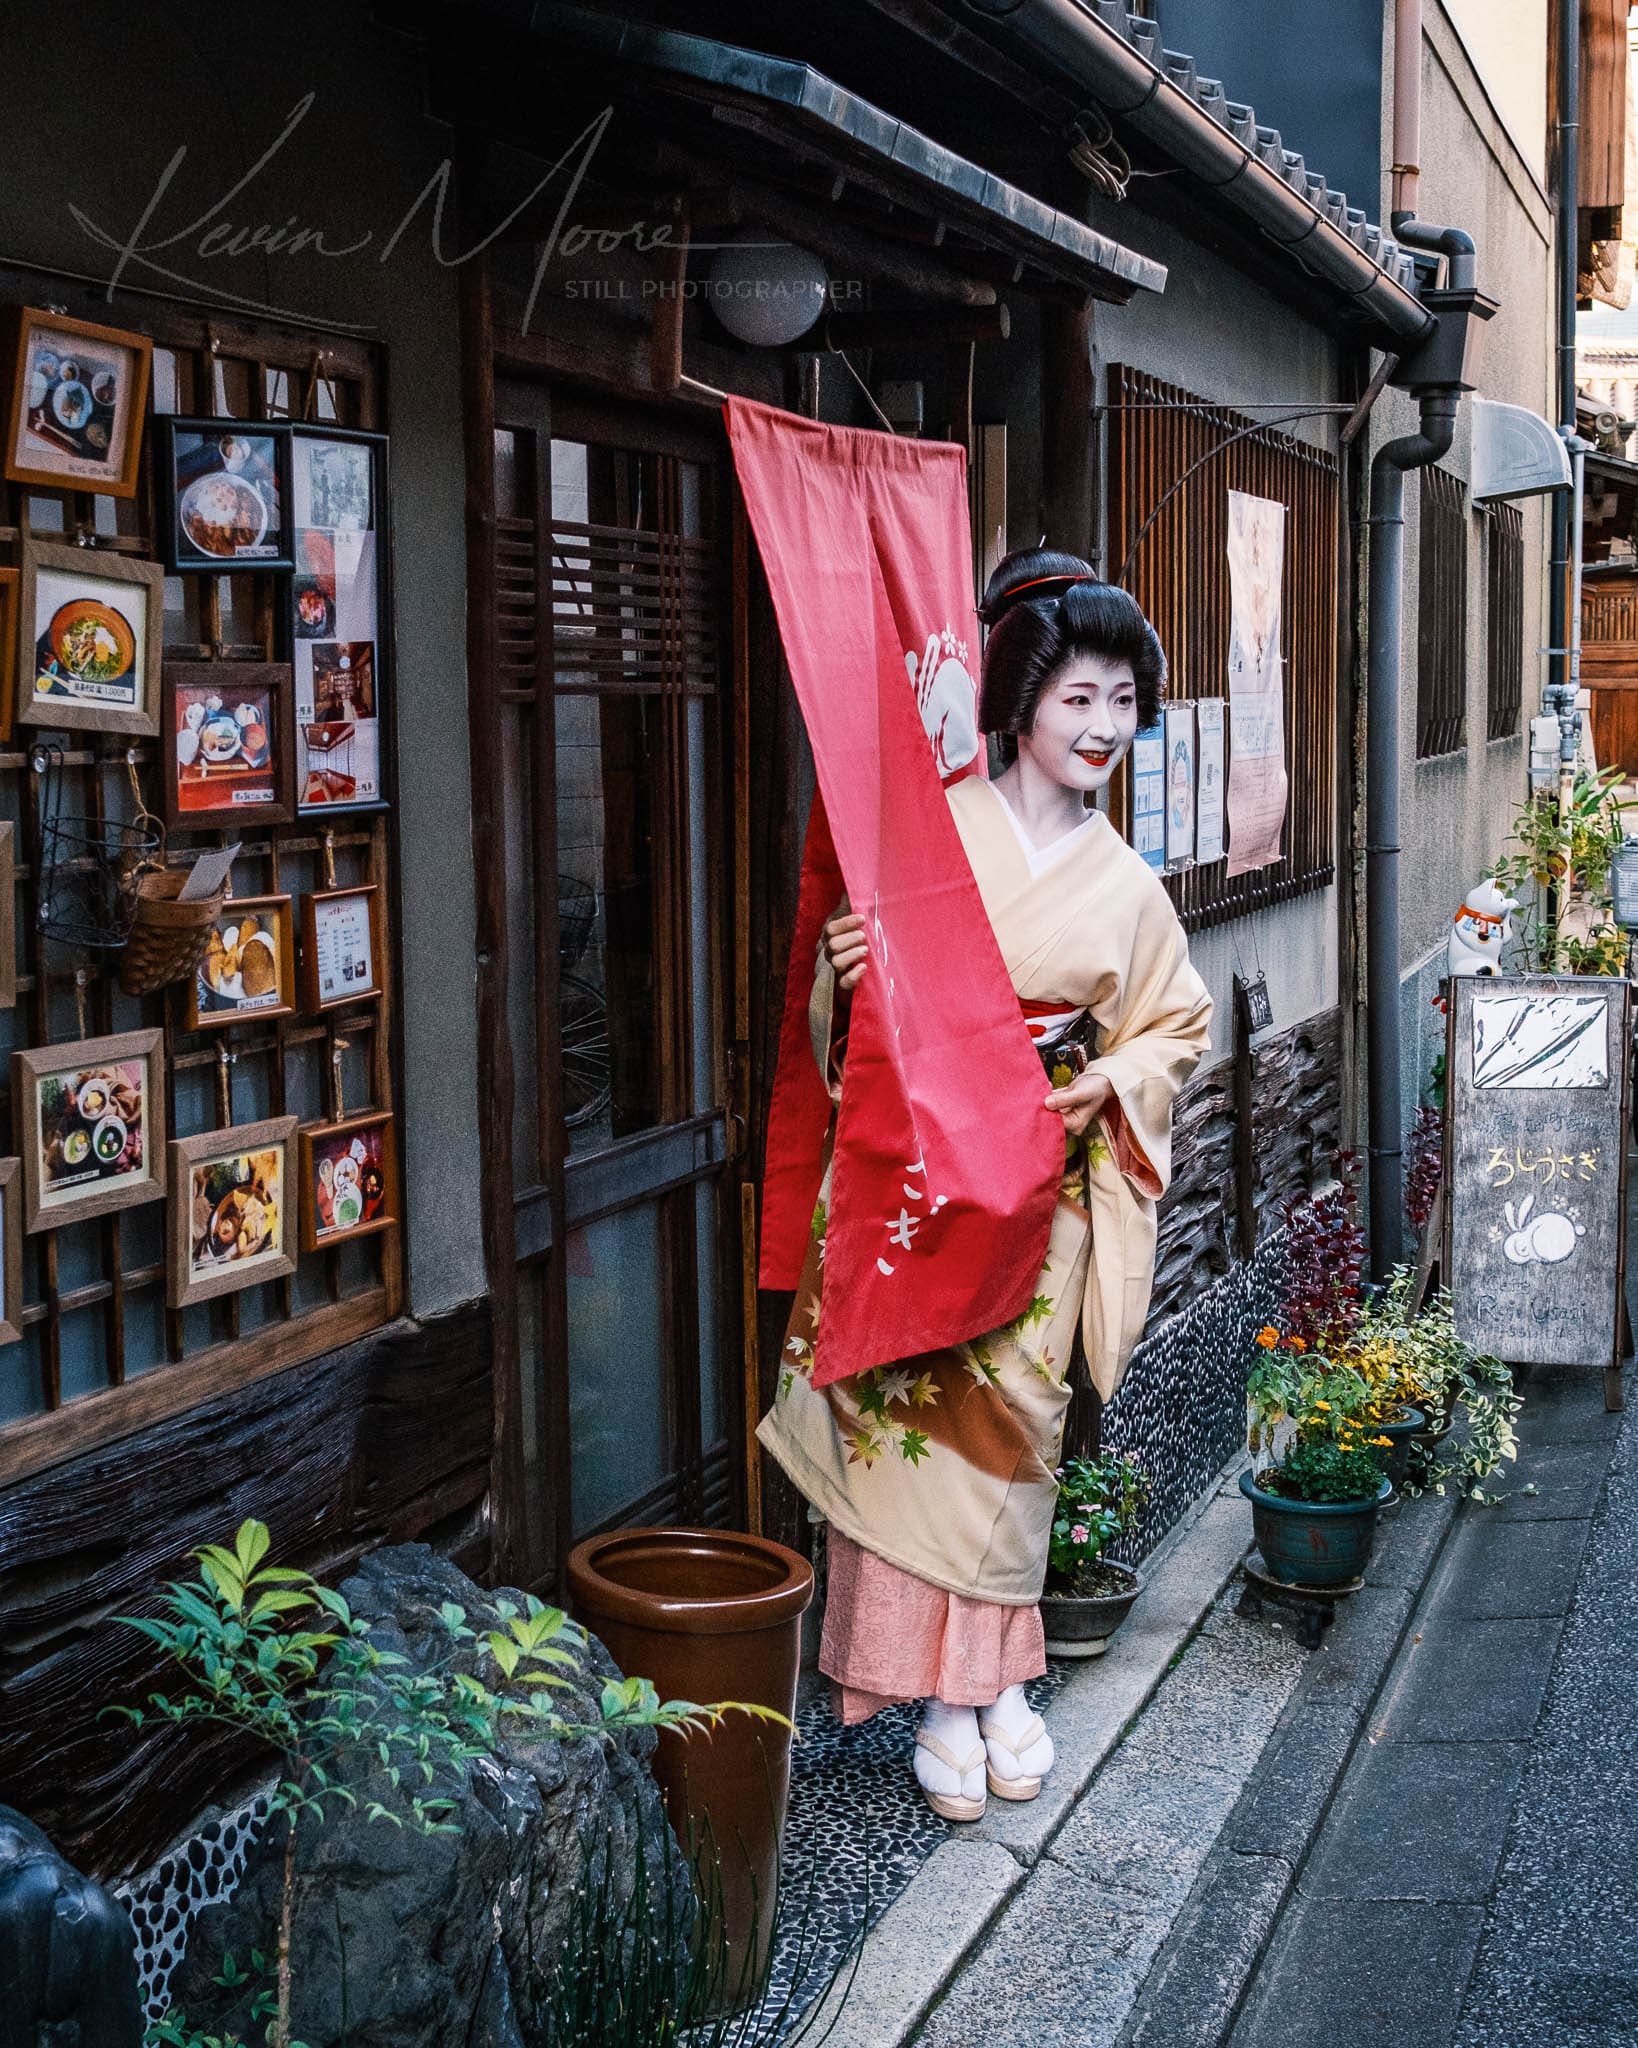 Geisha in kimono holding banner in historic Japanese alleyway